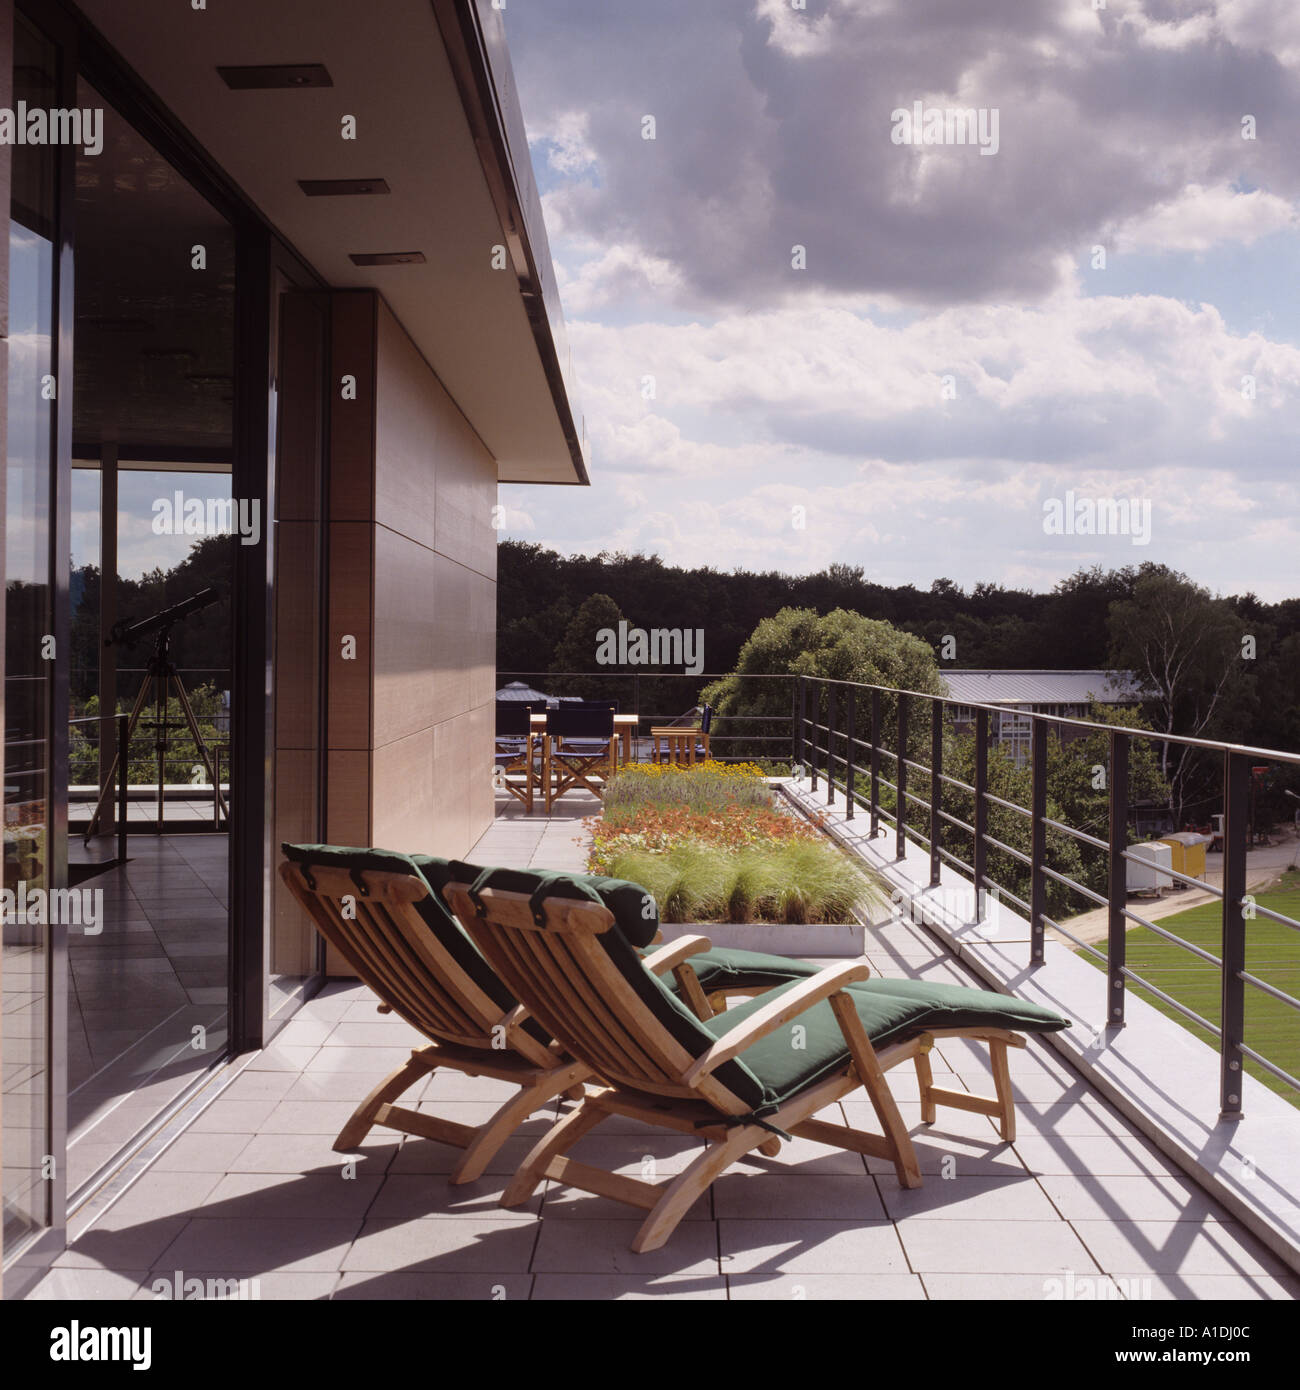 Sun loungers on balcony of of modern building Stock Photo - Alamy